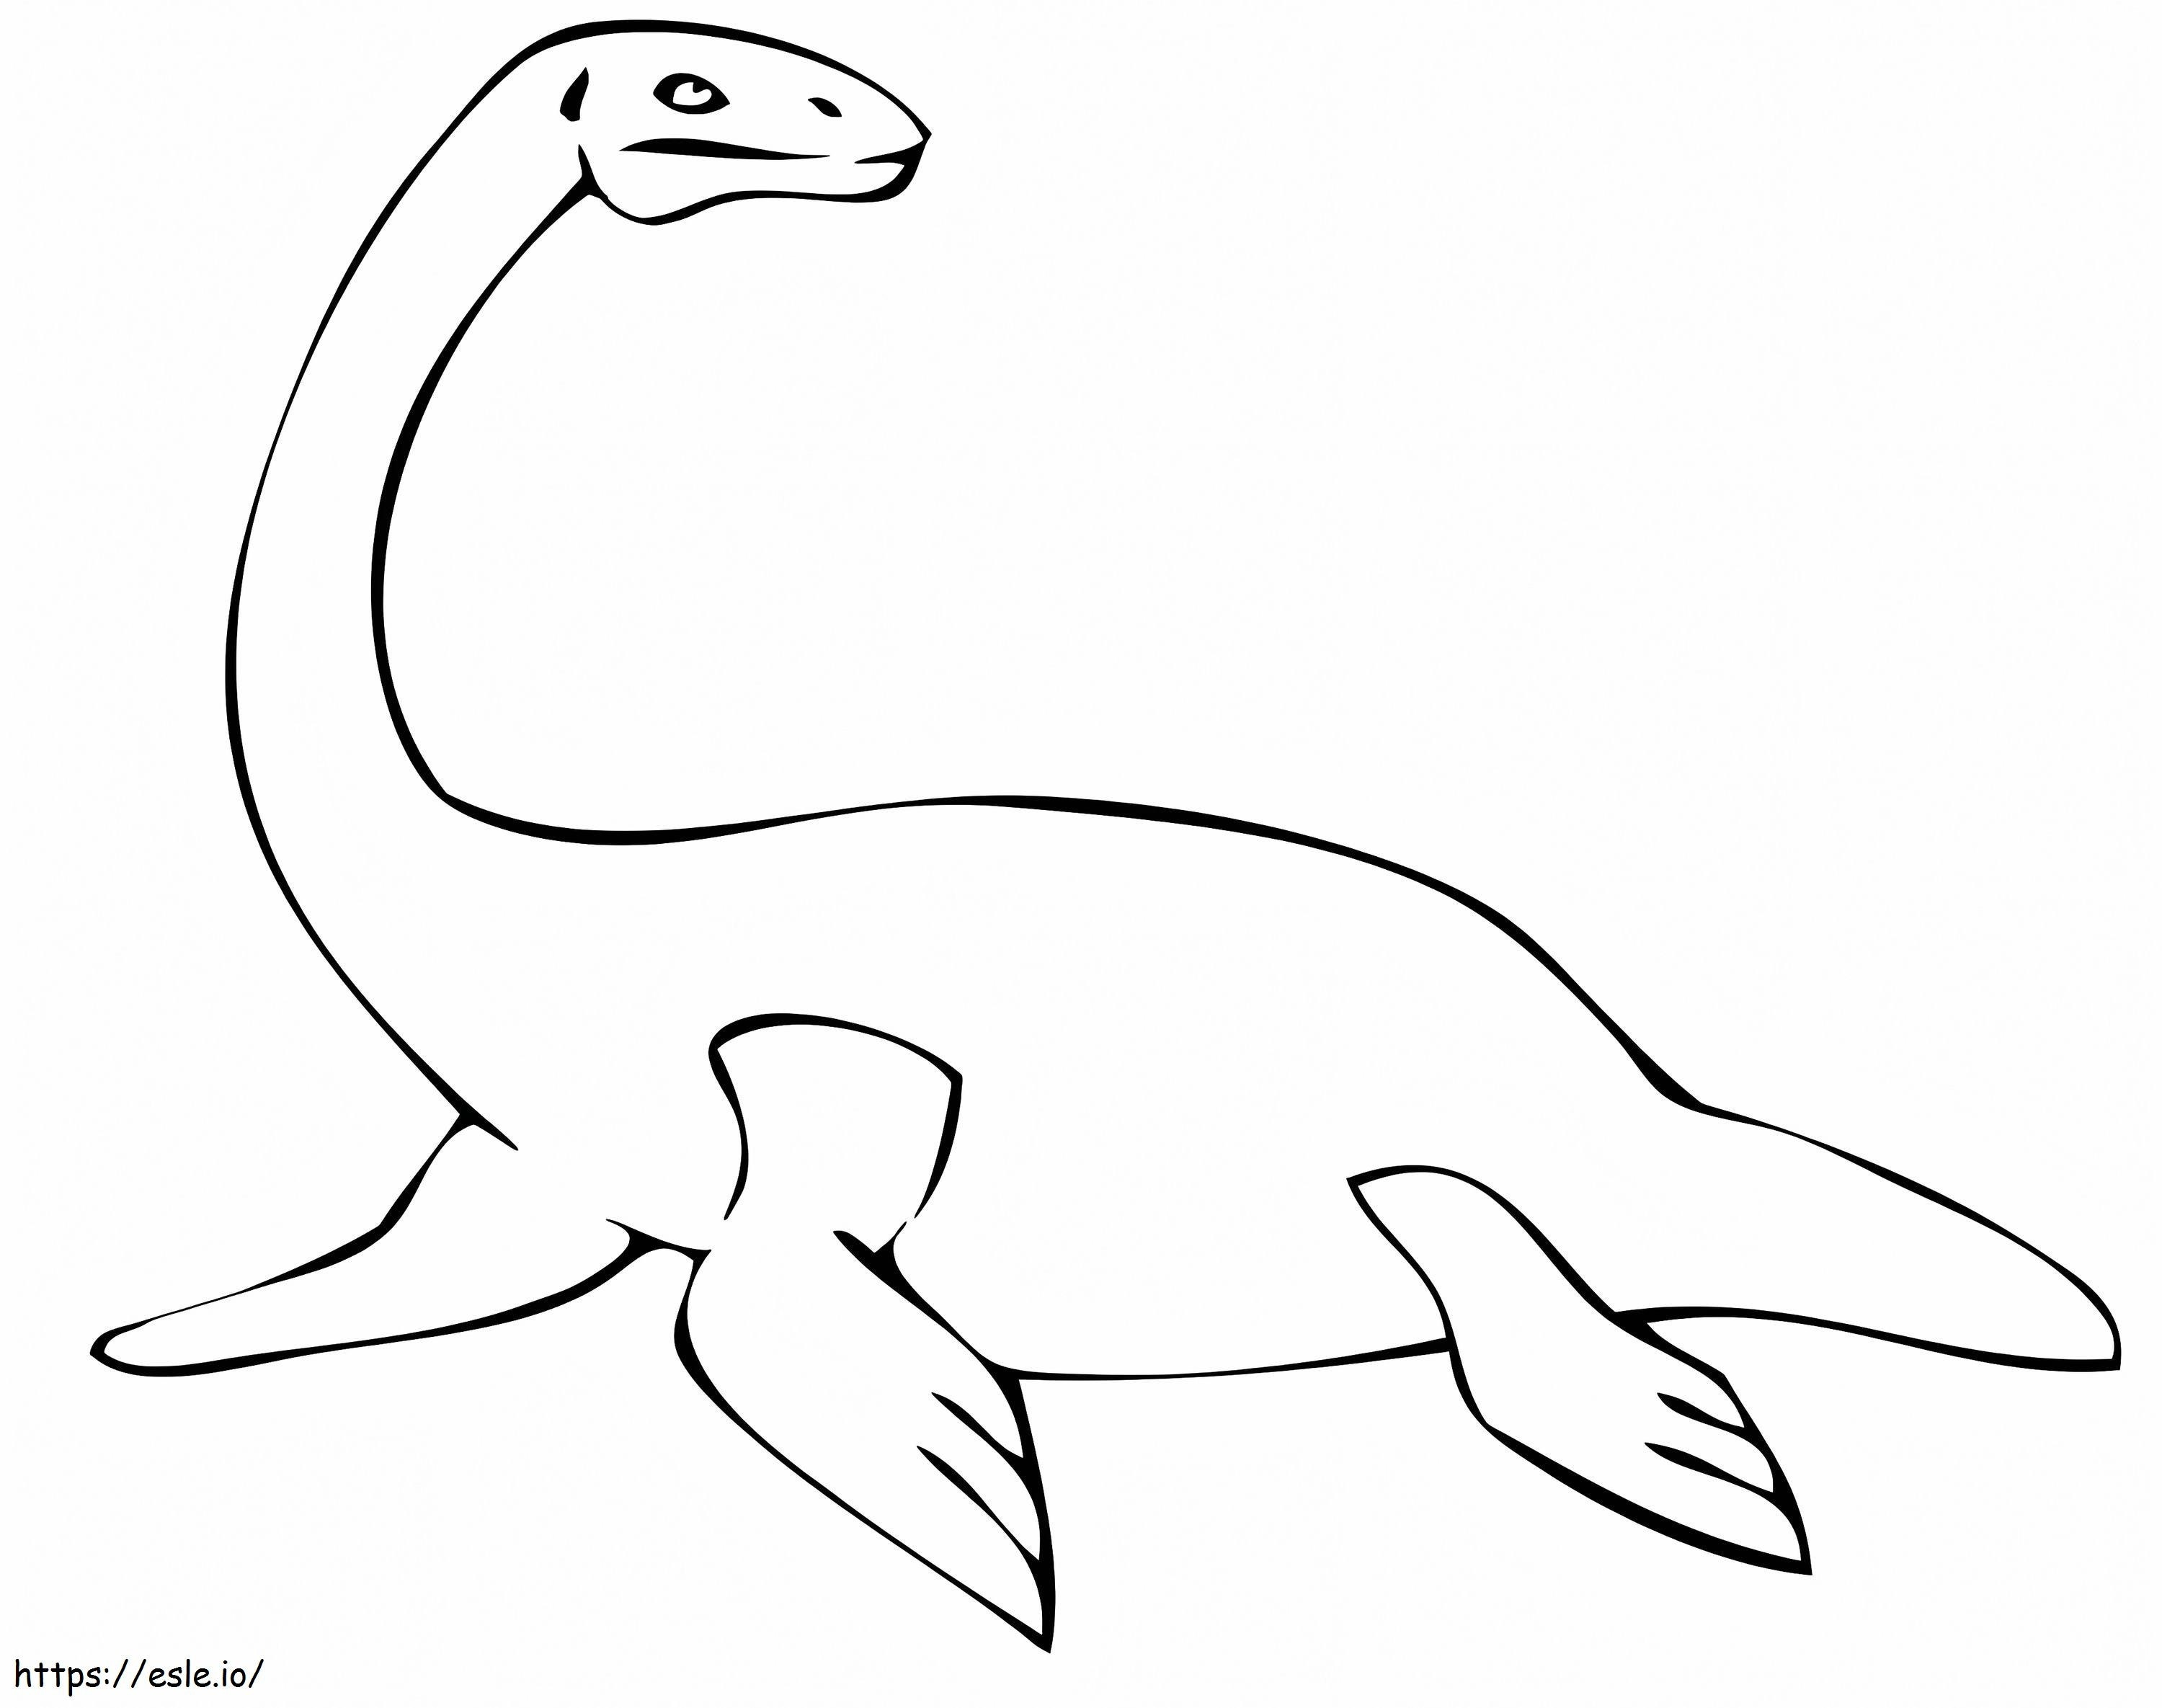 Plesiosaurus simplu de colorat